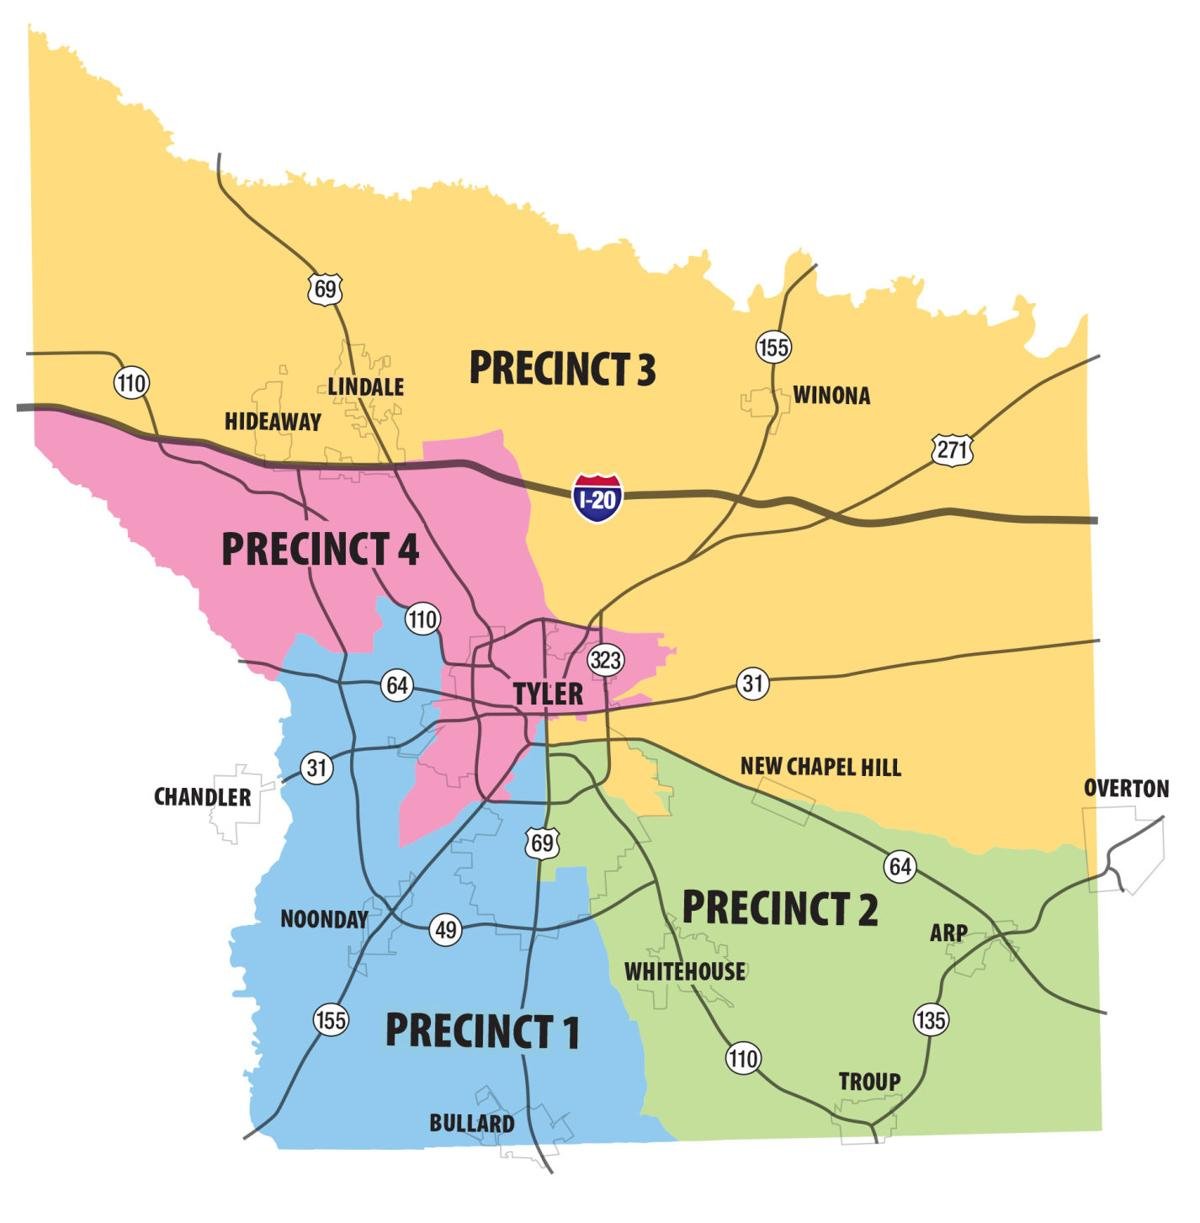 Precinct 2 will choose its representative on the Smith County